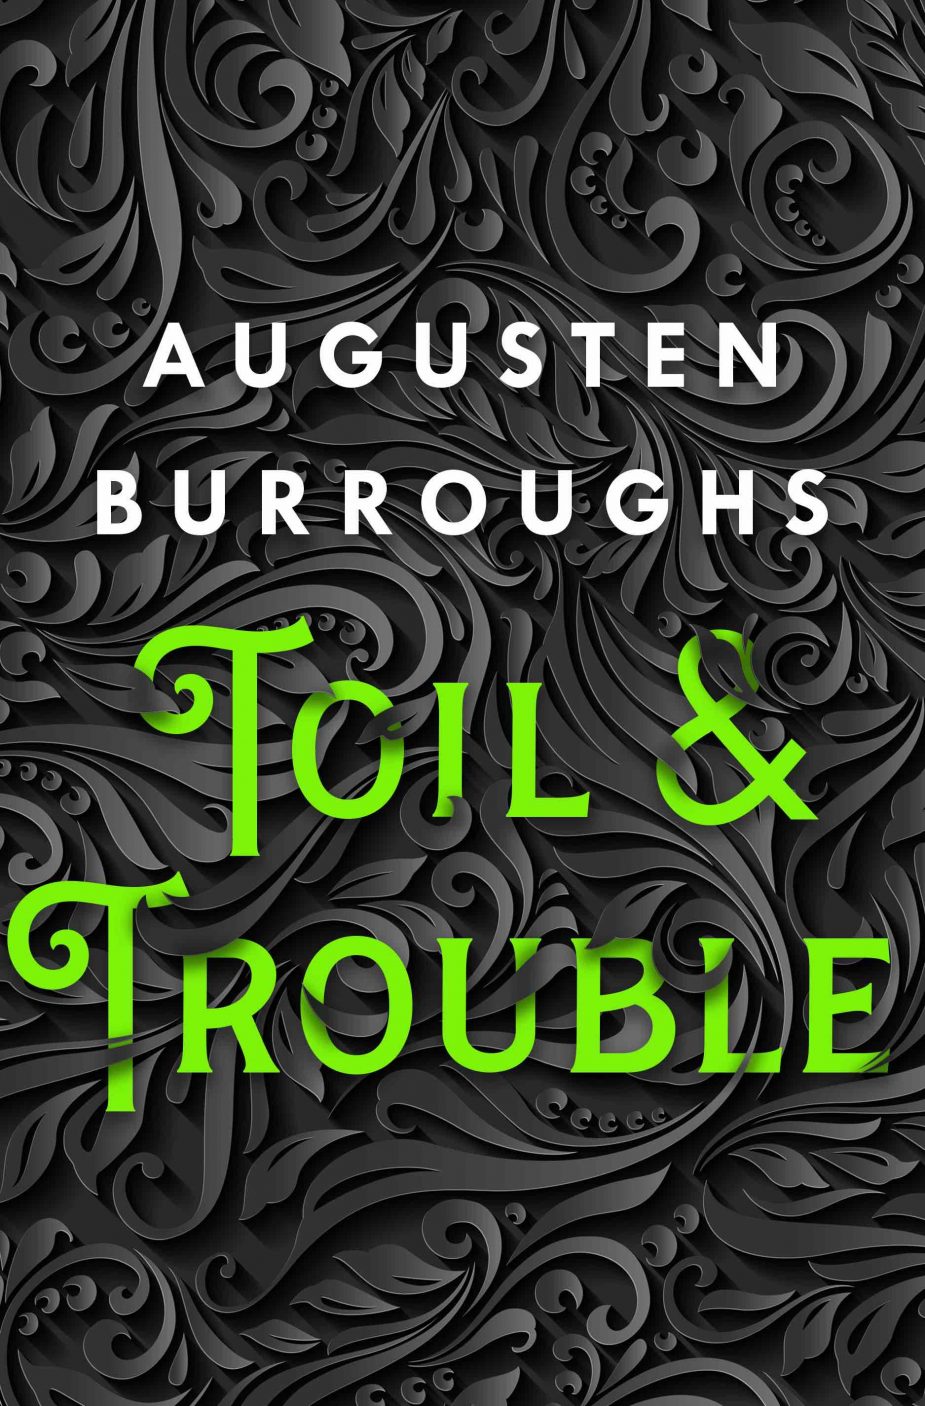 augusten burroughs goodreads